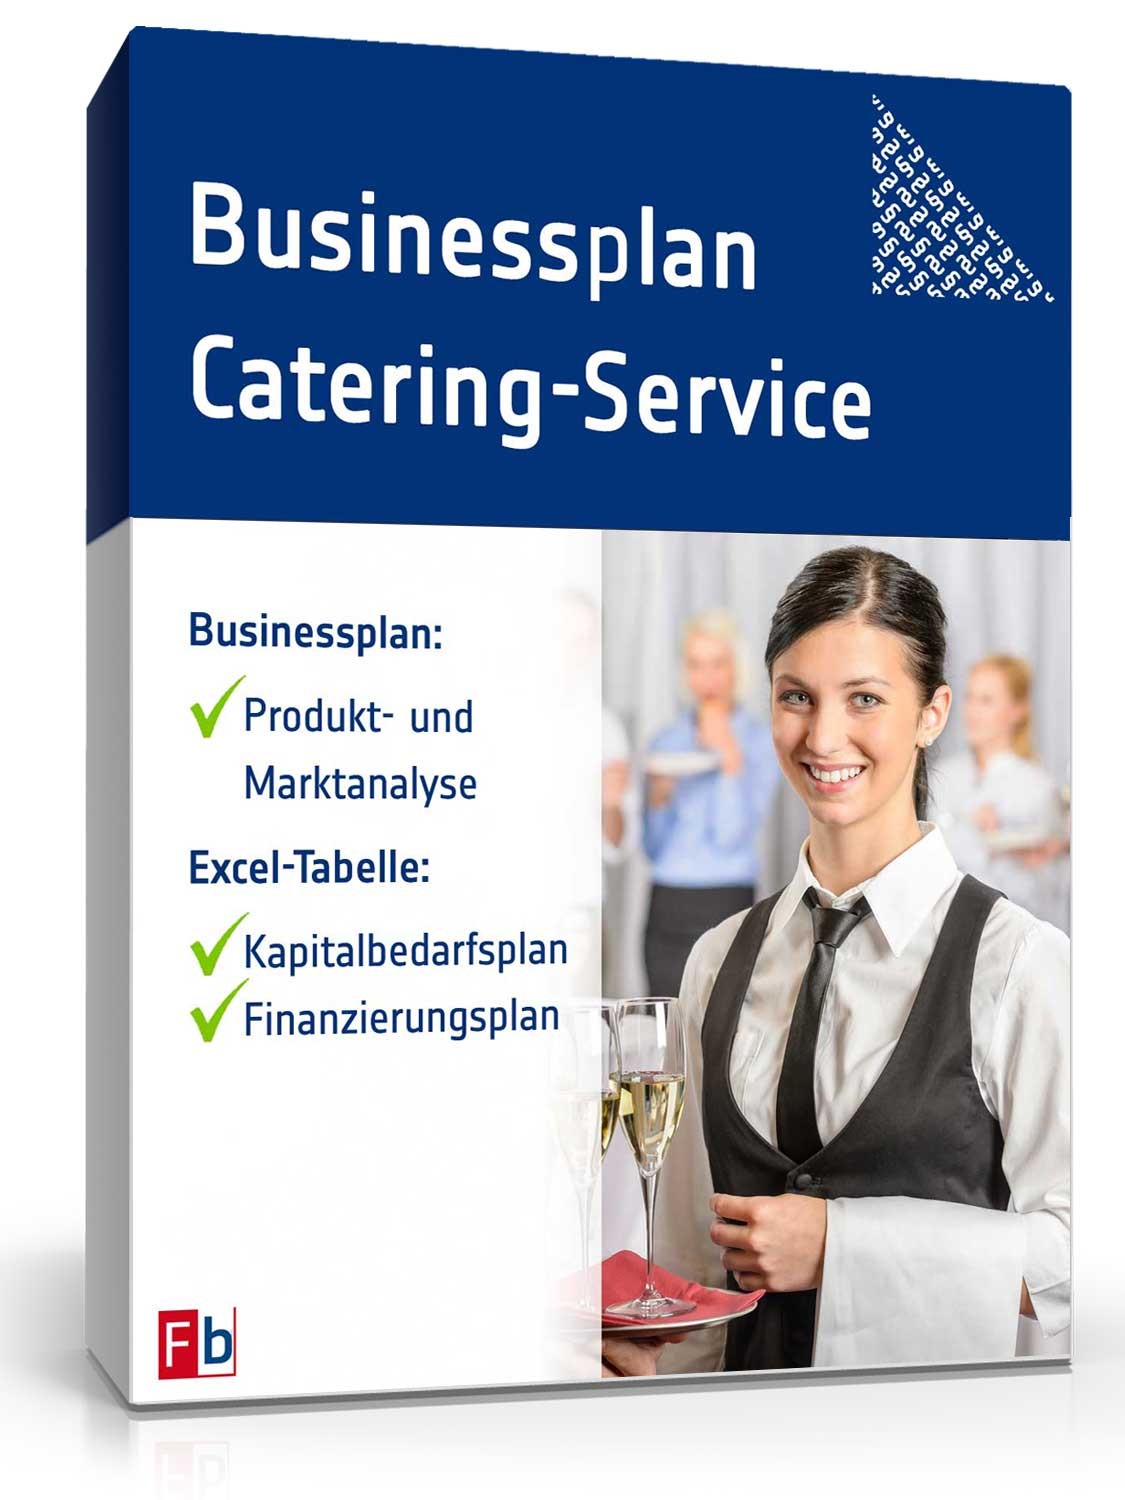 Hauptbild des Produkts: Businessplan Catering-Service